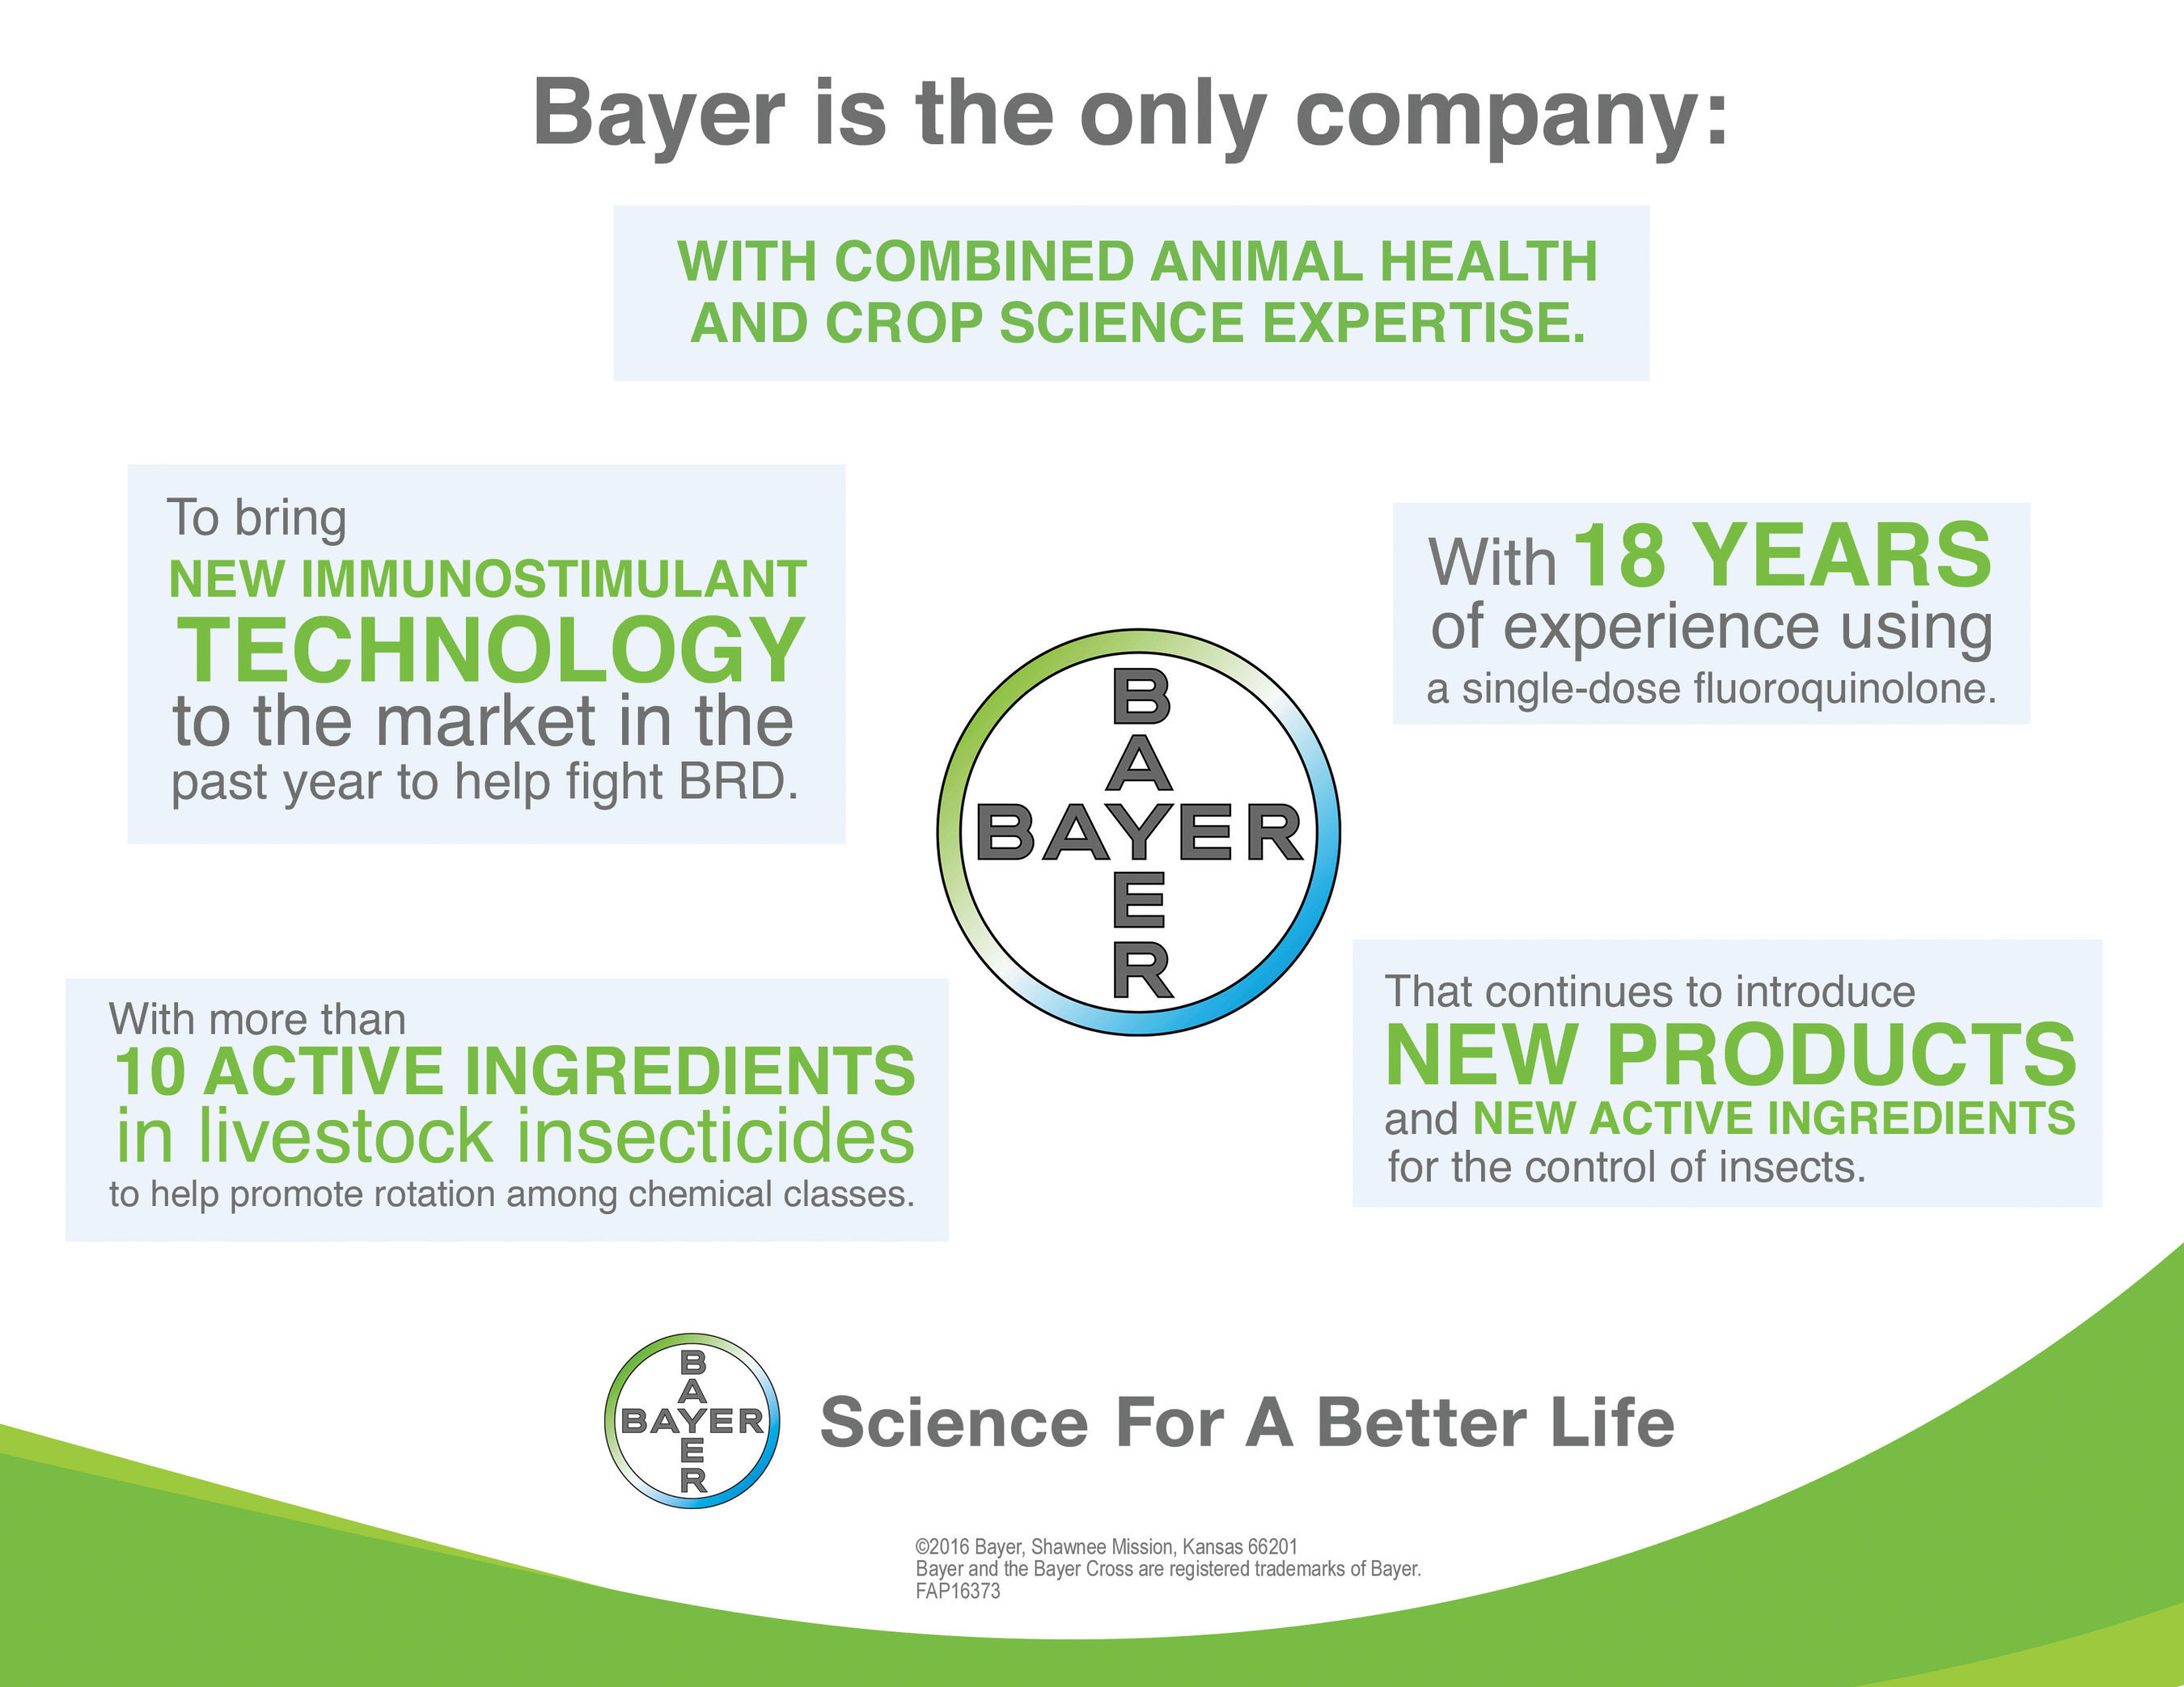 Bayer Puts Focus on Bringing Innovation to Livestock Producers